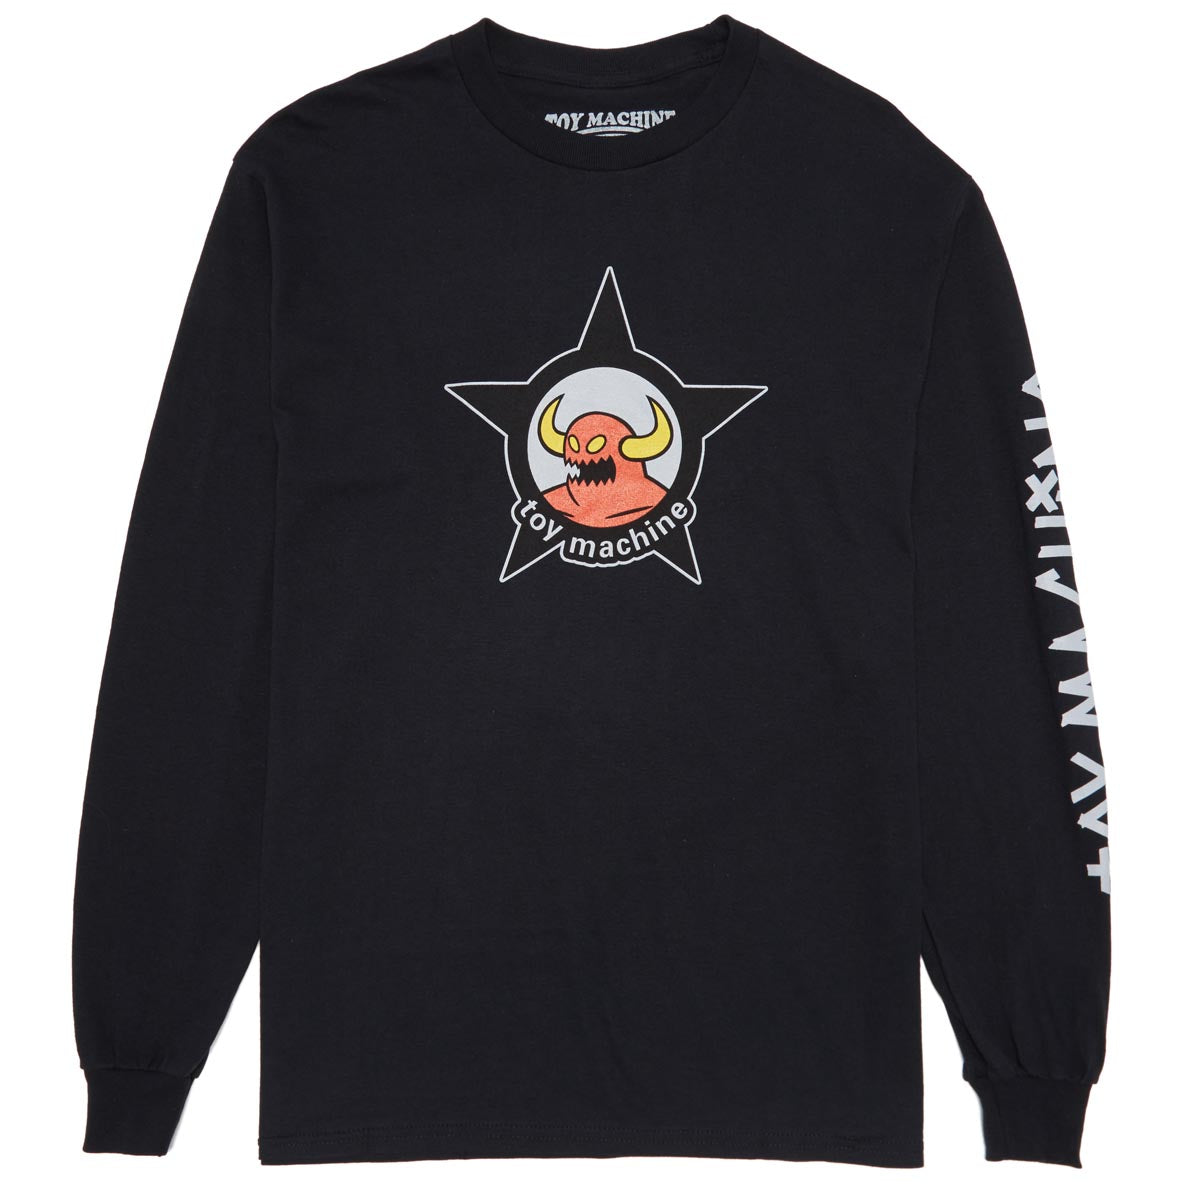 Toy Machine Mon-star Long Sleeve T-Shirt - Black image 1